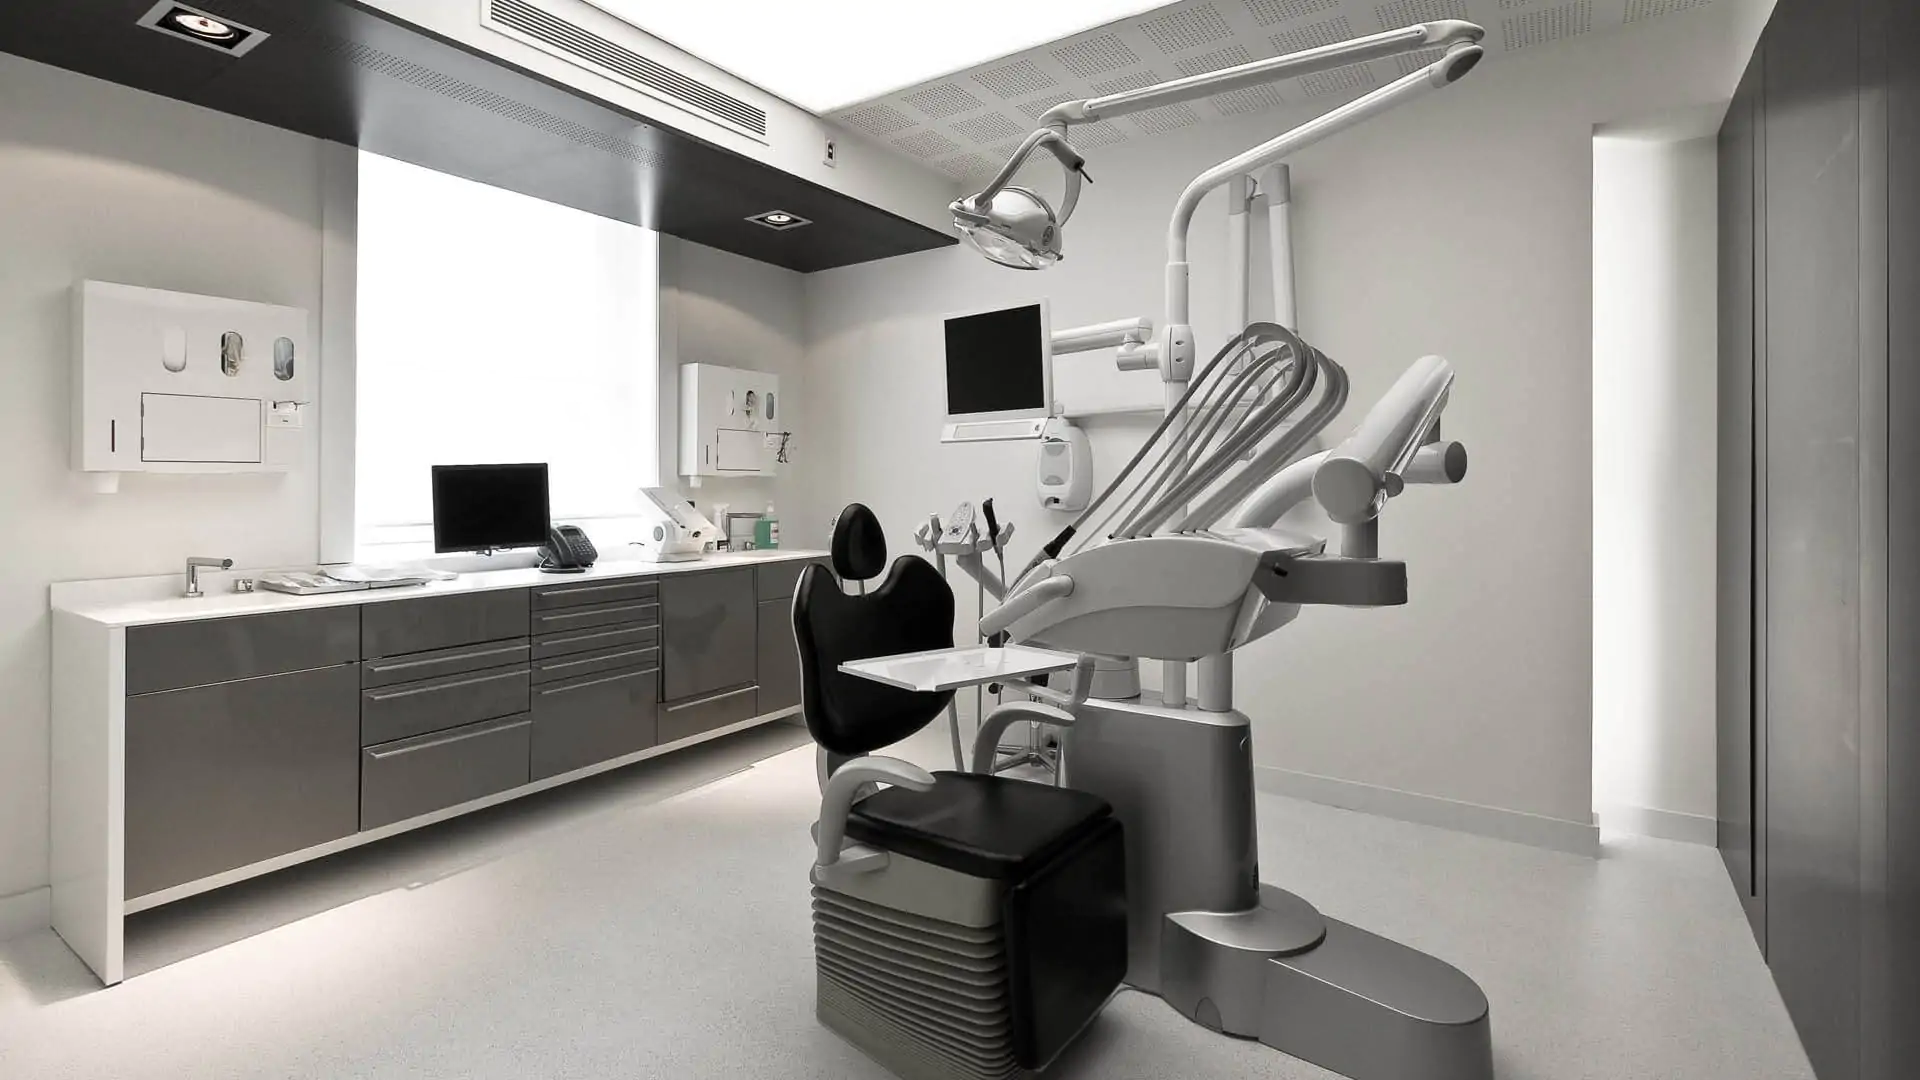 Diagnostic Center Interior Design (14)